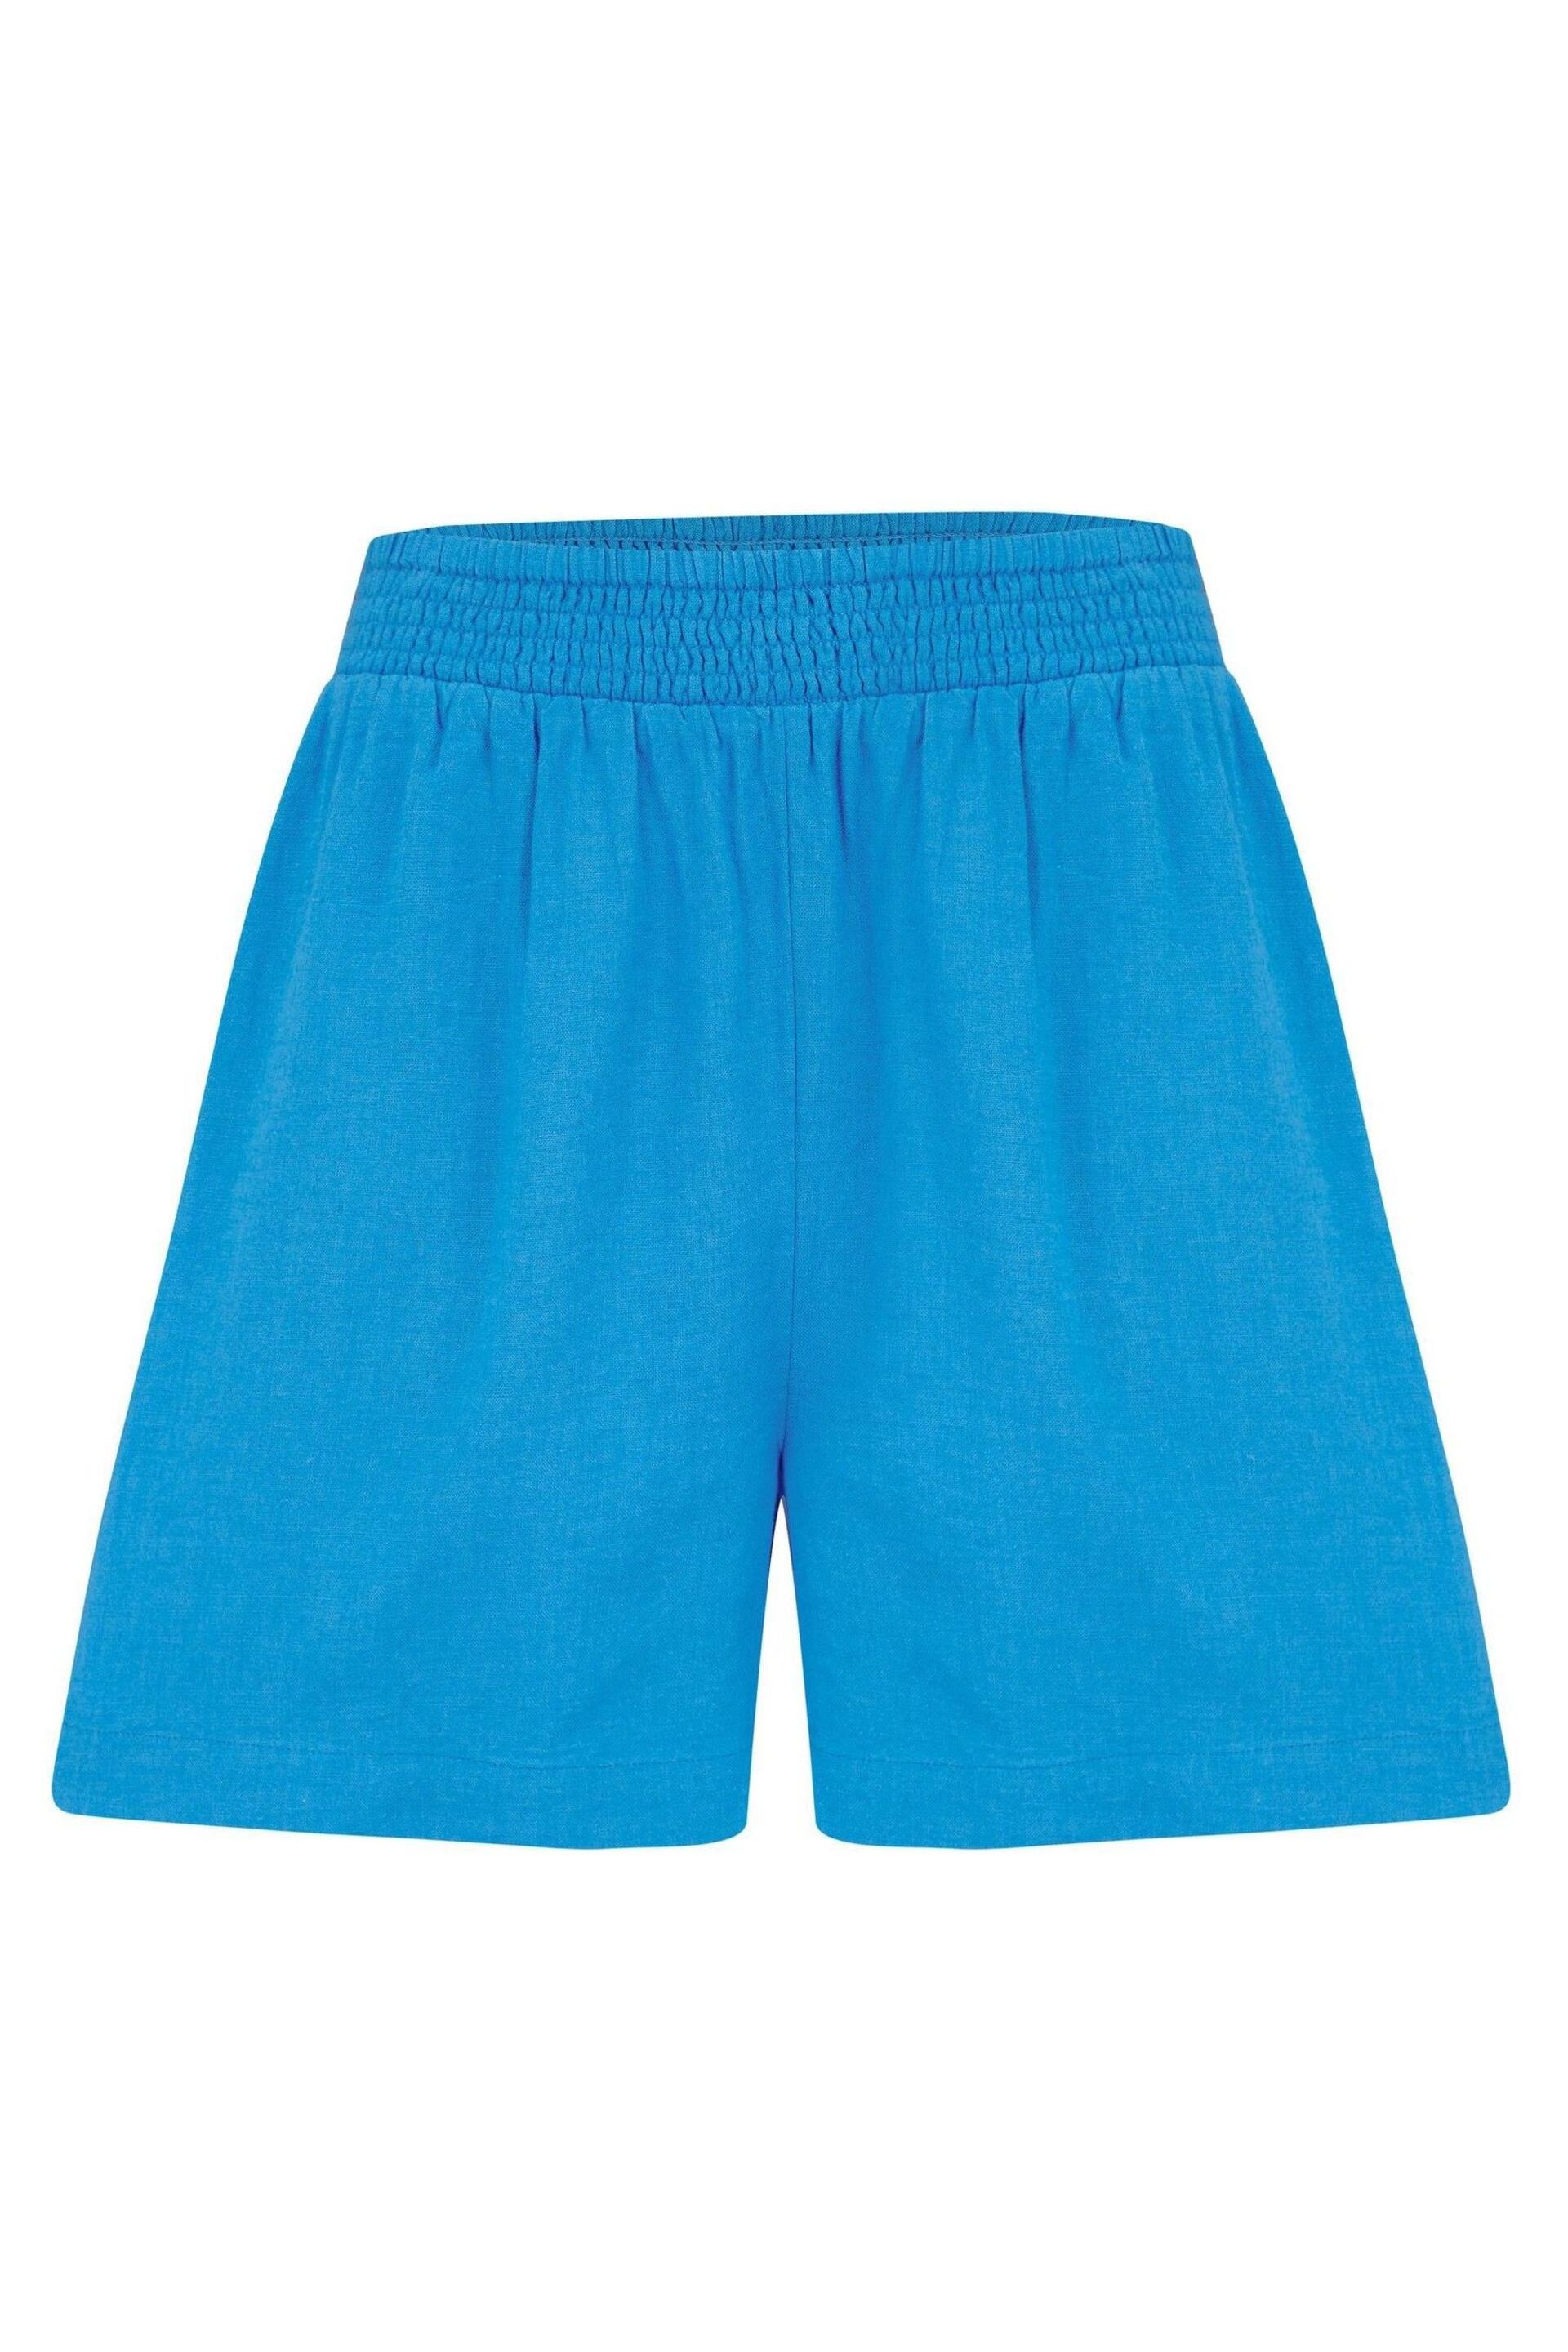 Pour Moi Blue Bree High Waist Linen Blend Elasticated Shorts - Image 4 of 4